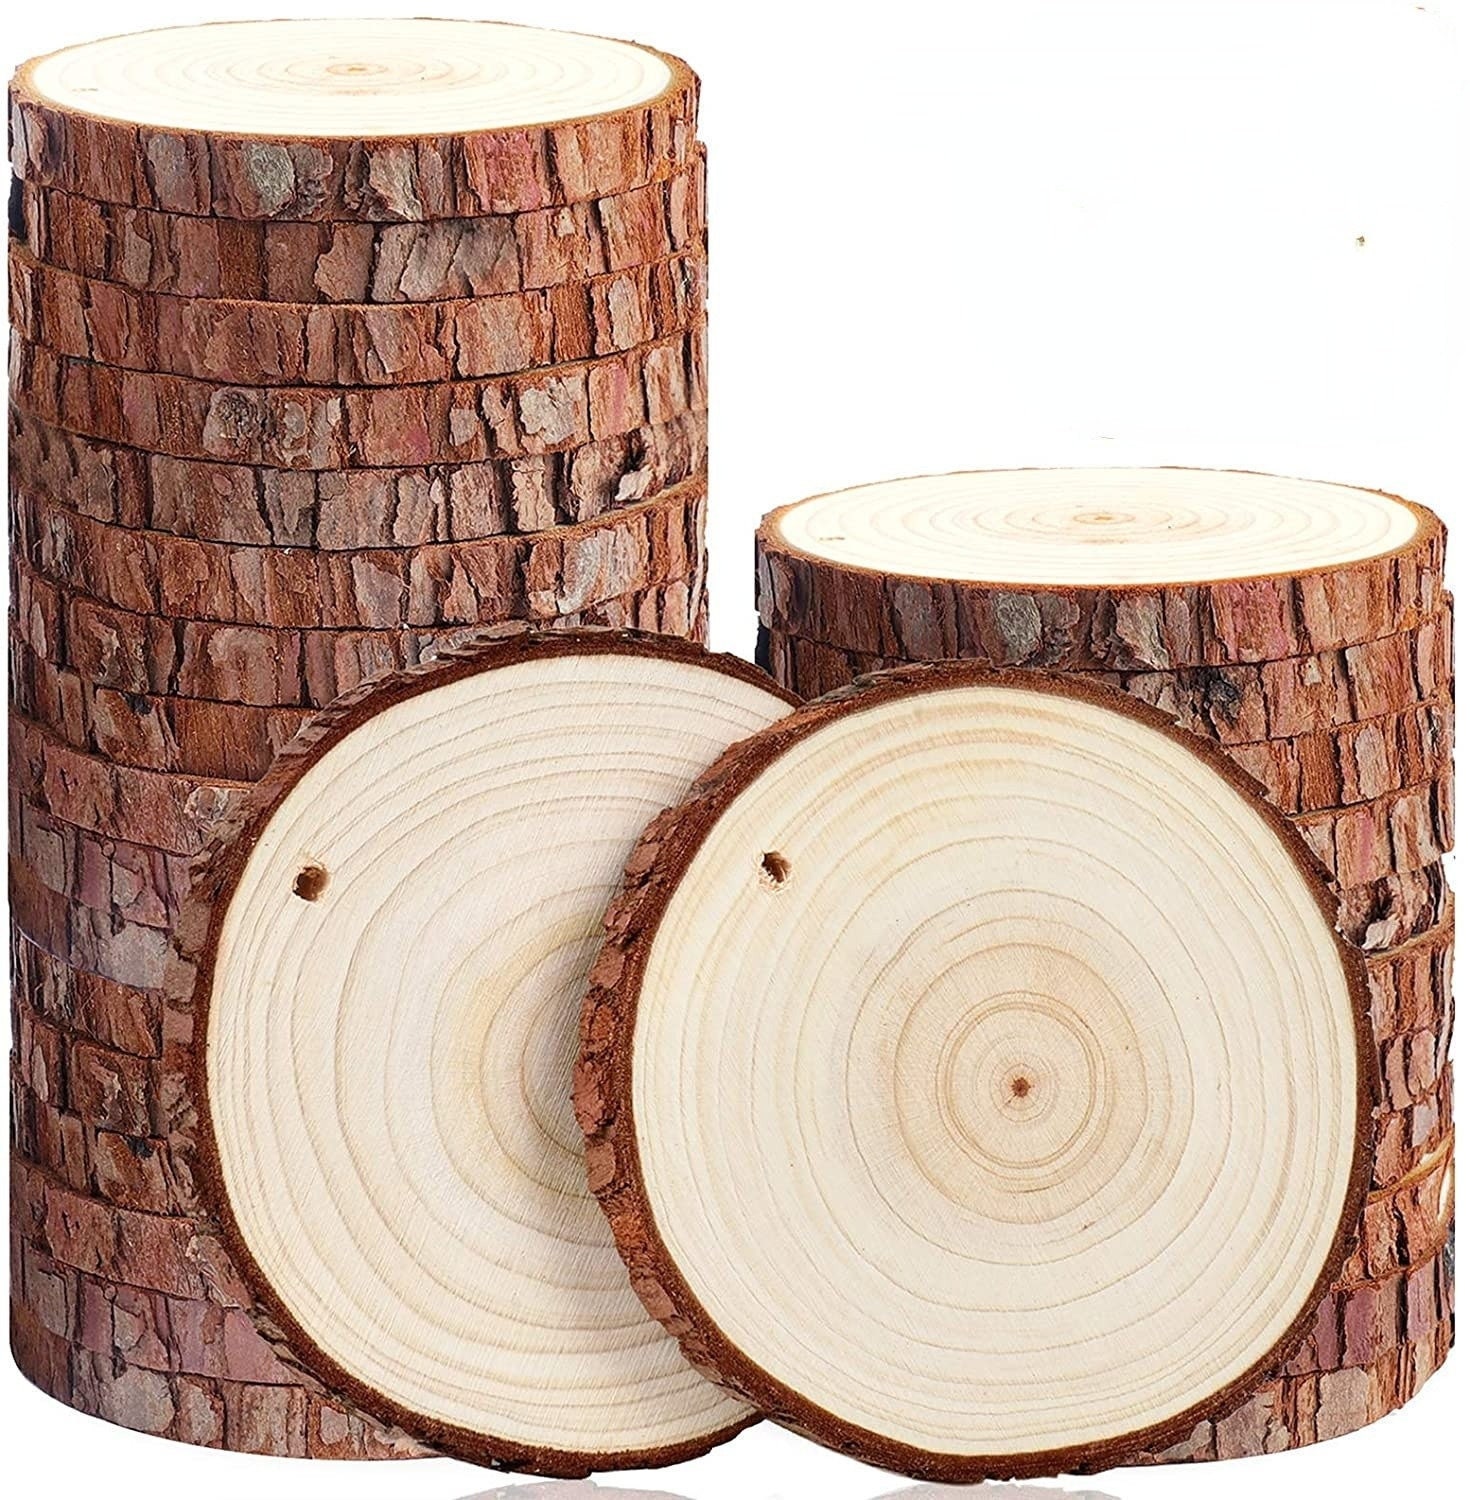 Kiln Dried 4 Inch Craft Wood Rounds Set of 100 Pcs 